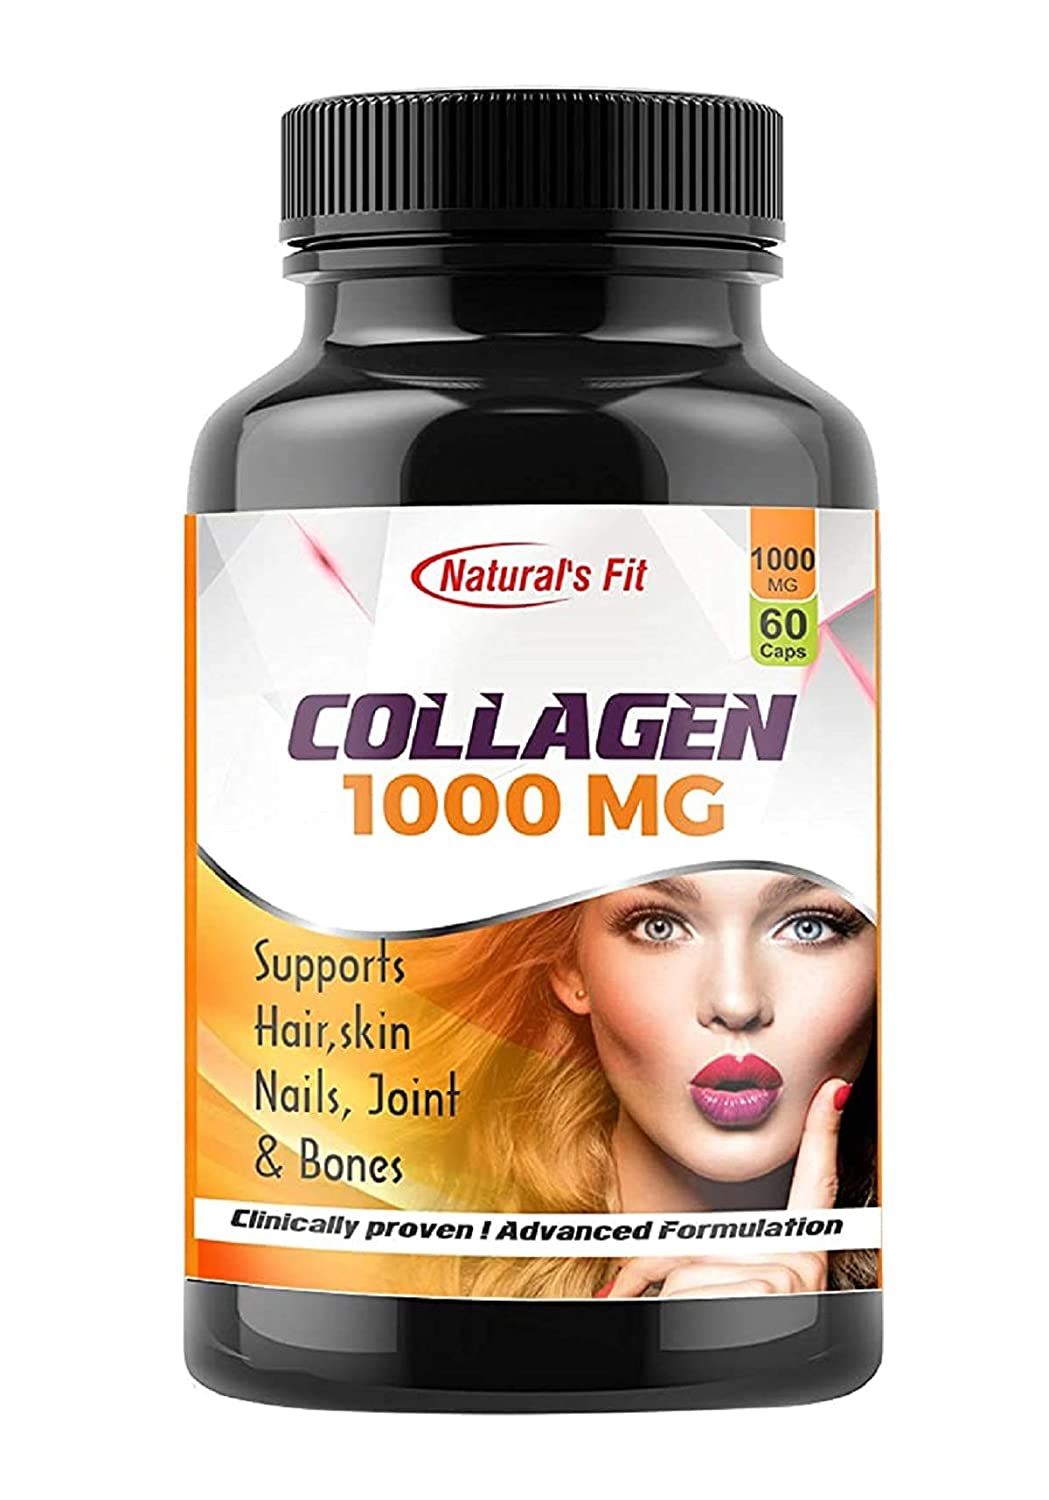 Natural's Fit Collagen 1000 MB Image